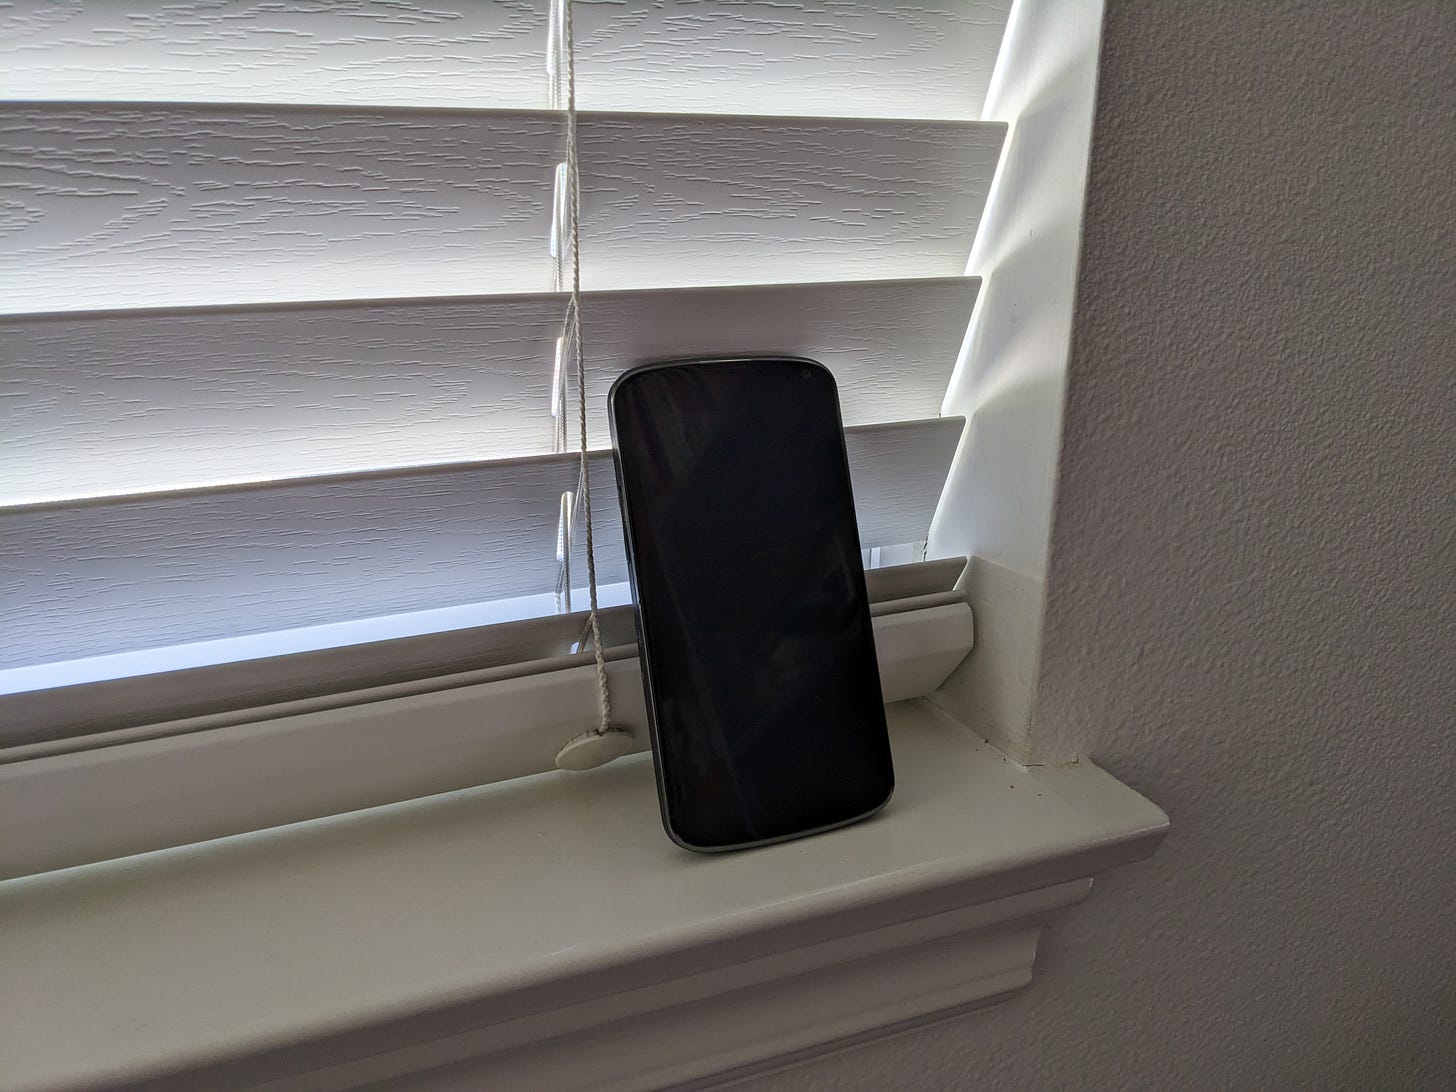 picture of google nexus phone by window